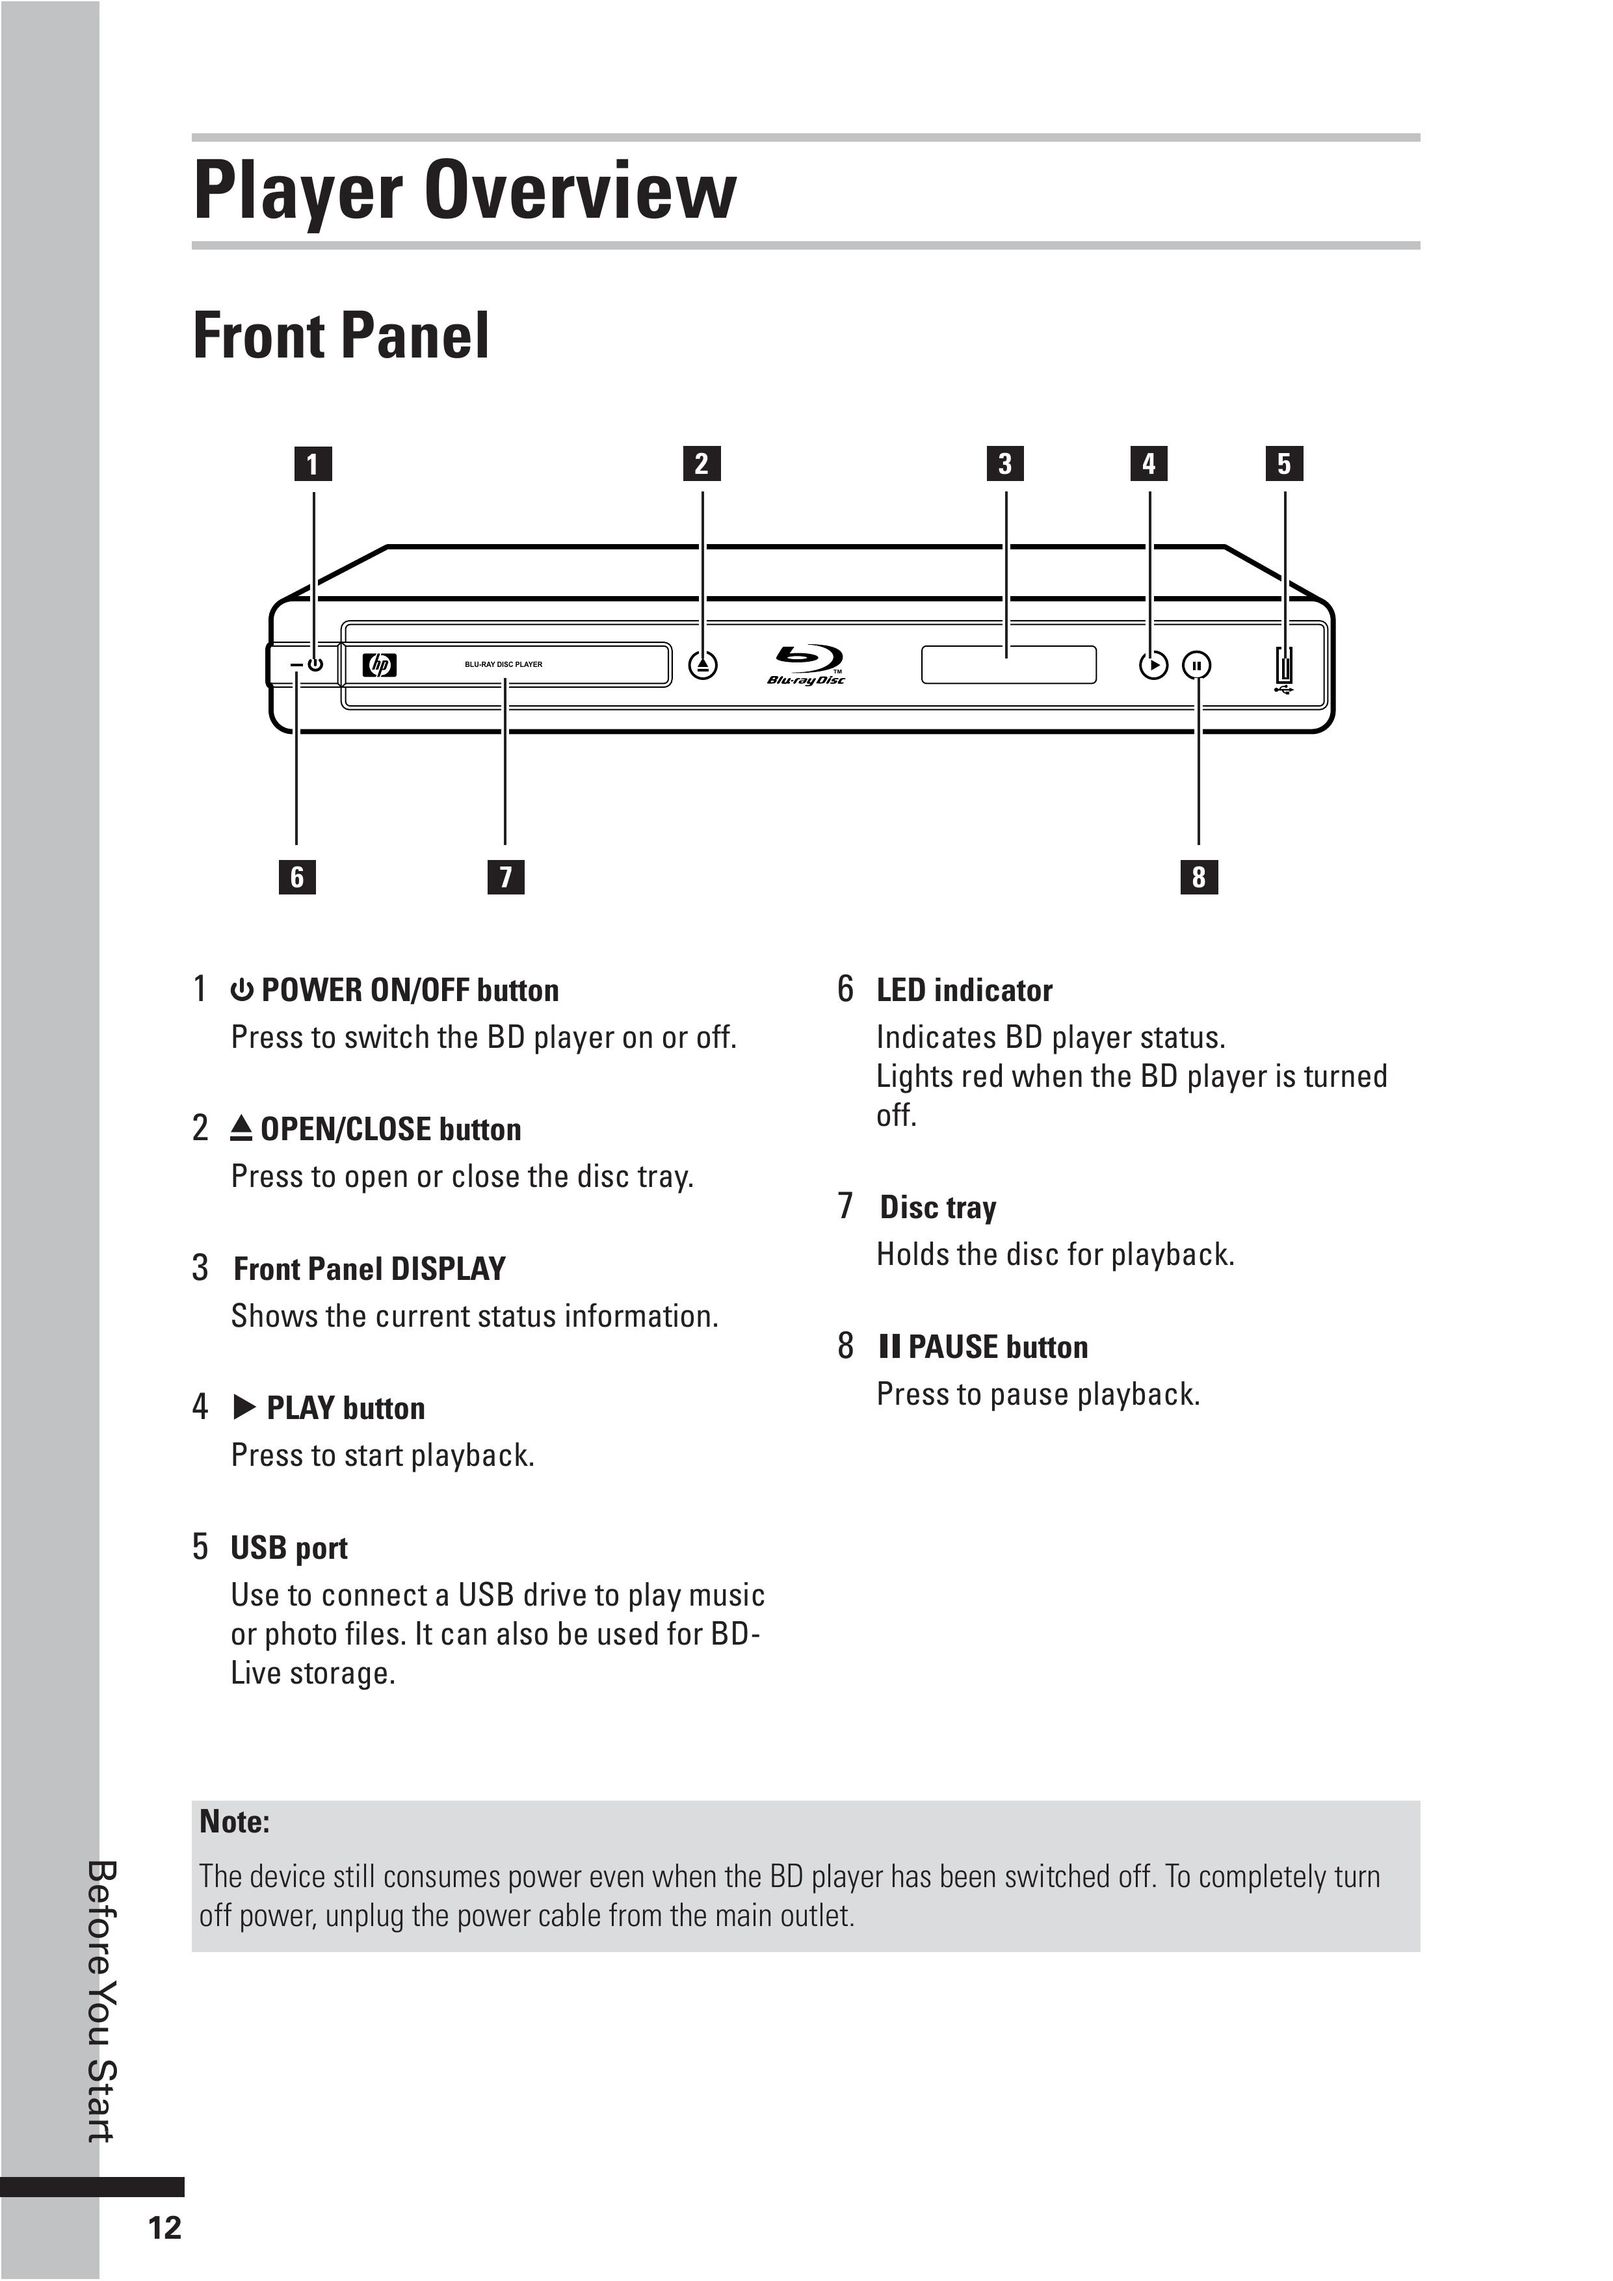 HP (Hewlett-Packard) BD-2000 Blu-ray Player User Manual (Page 12)